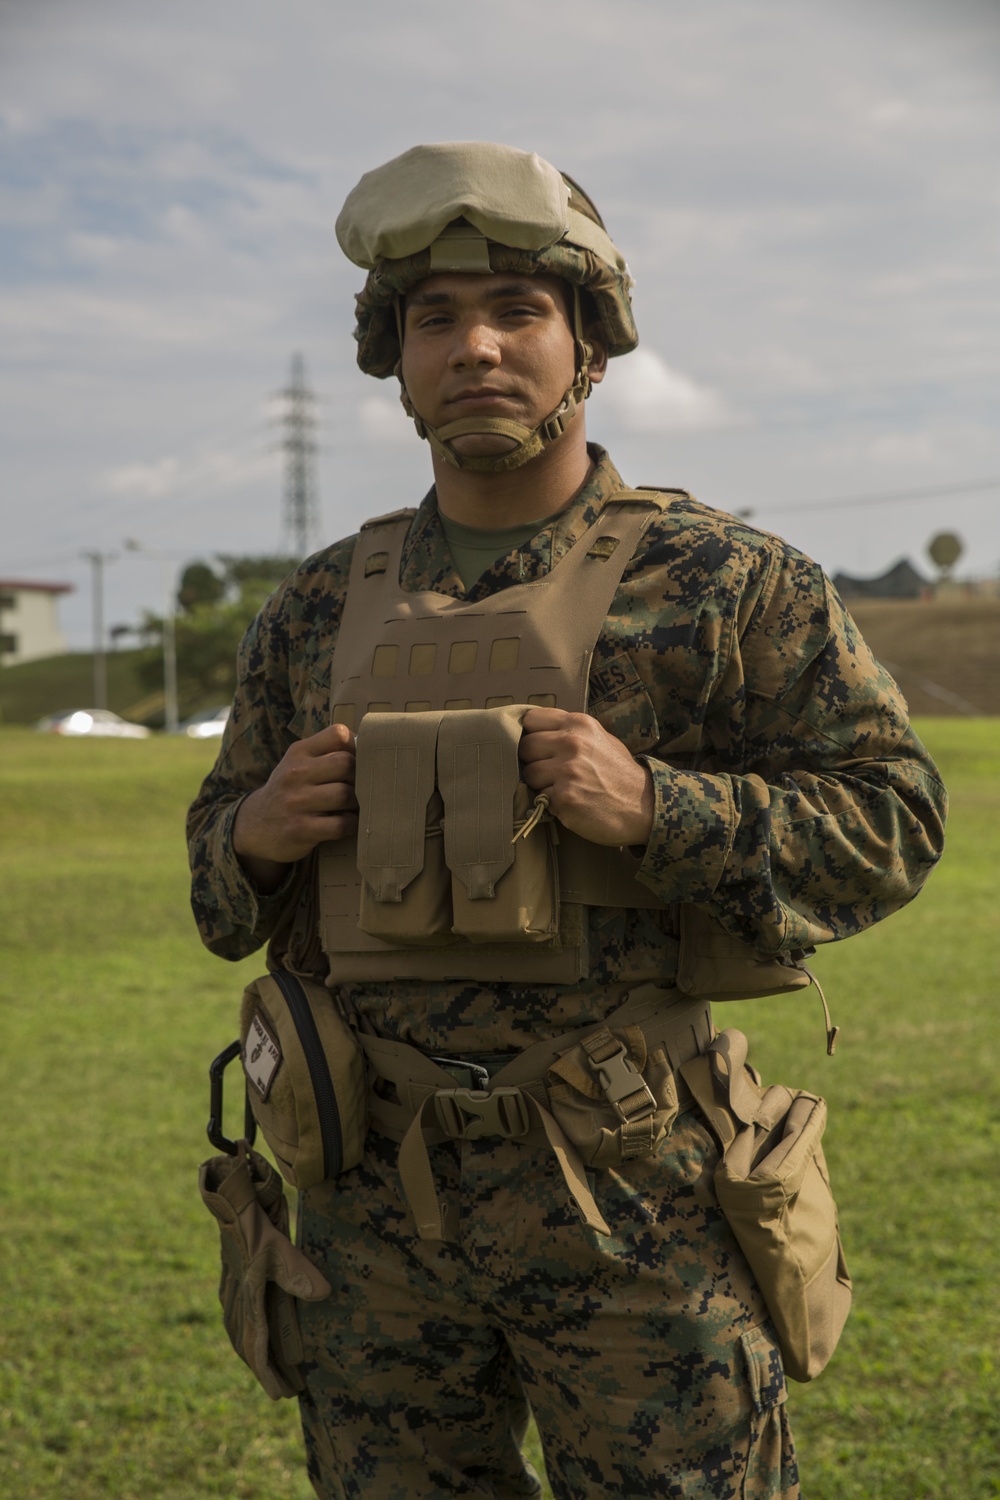 Bronx Marine, deployed to Okinawa, leads by example